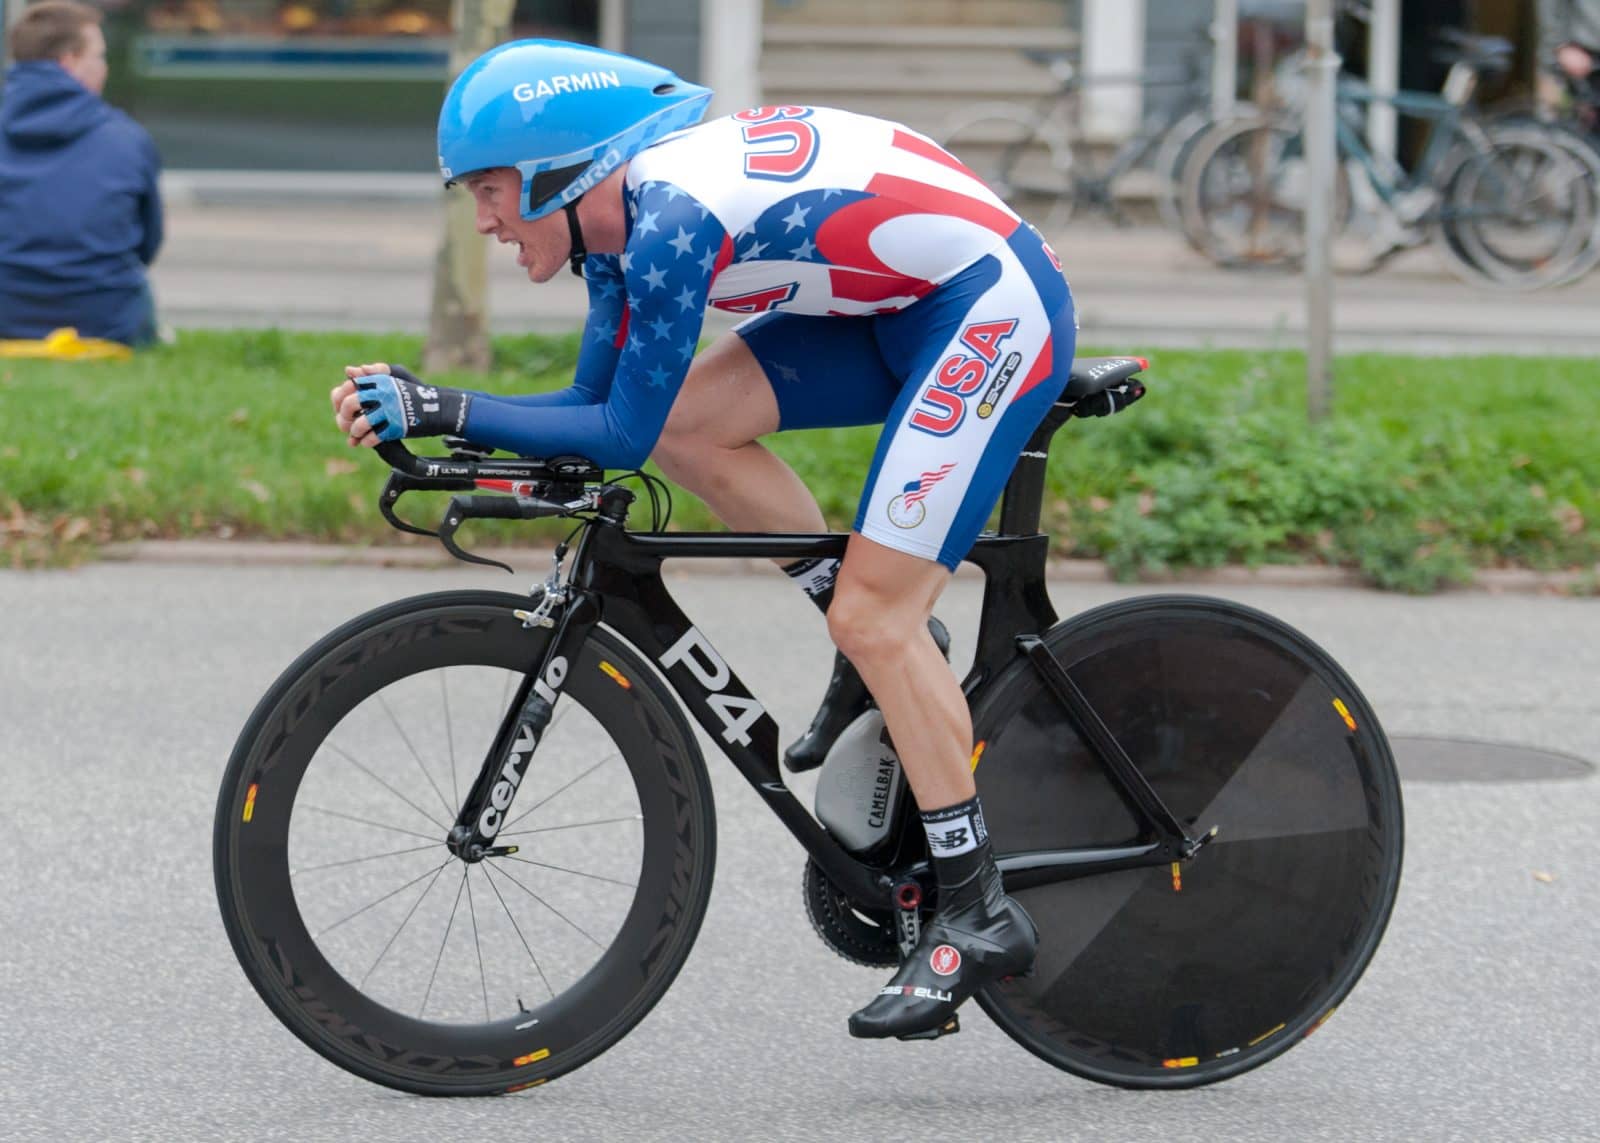 American professional triathlete Andrew Talansky